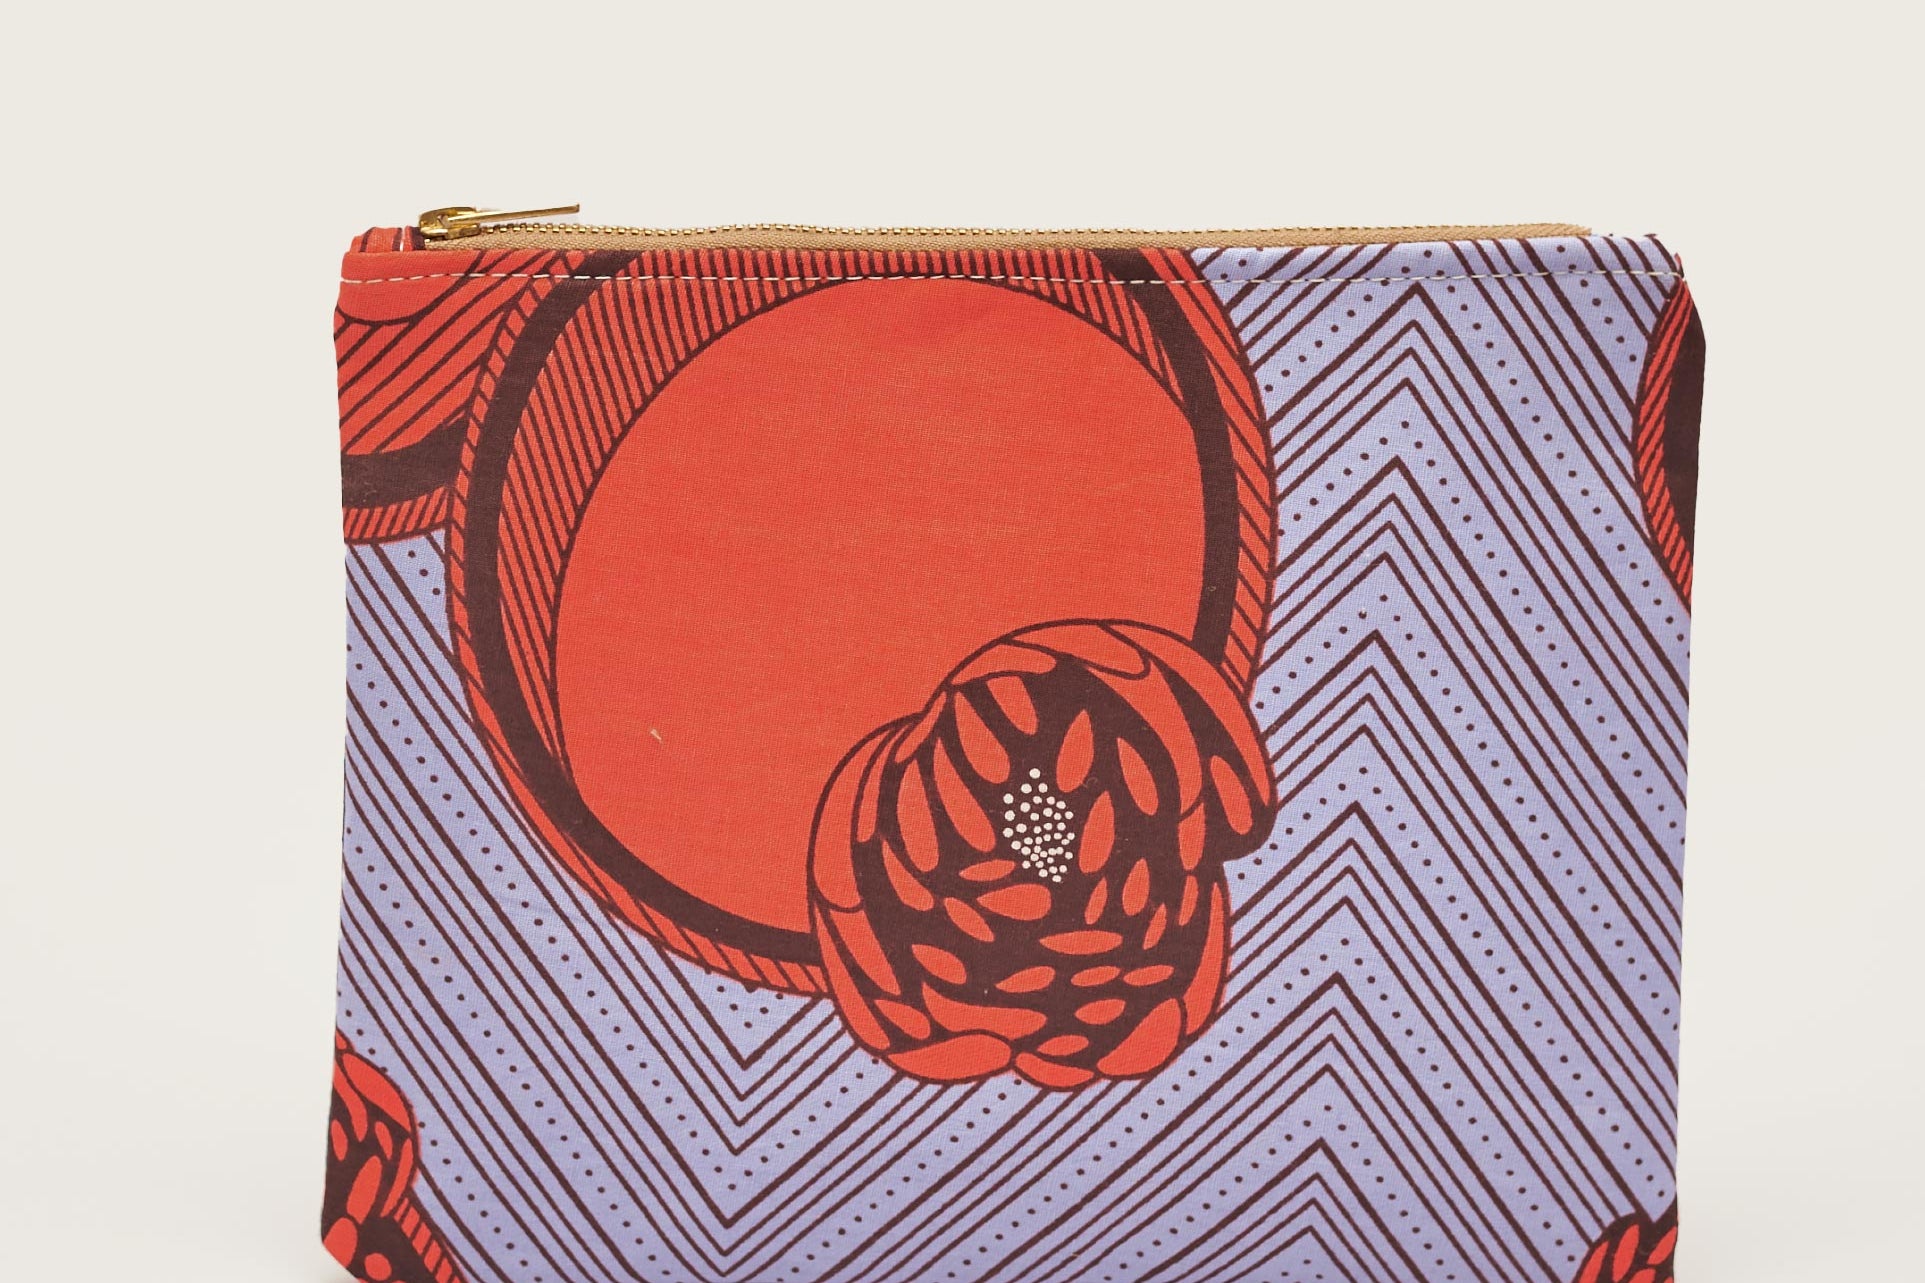 Purple and red hand-dyed Geometric print Zipper Clutch bag by GEOMETRIC. 